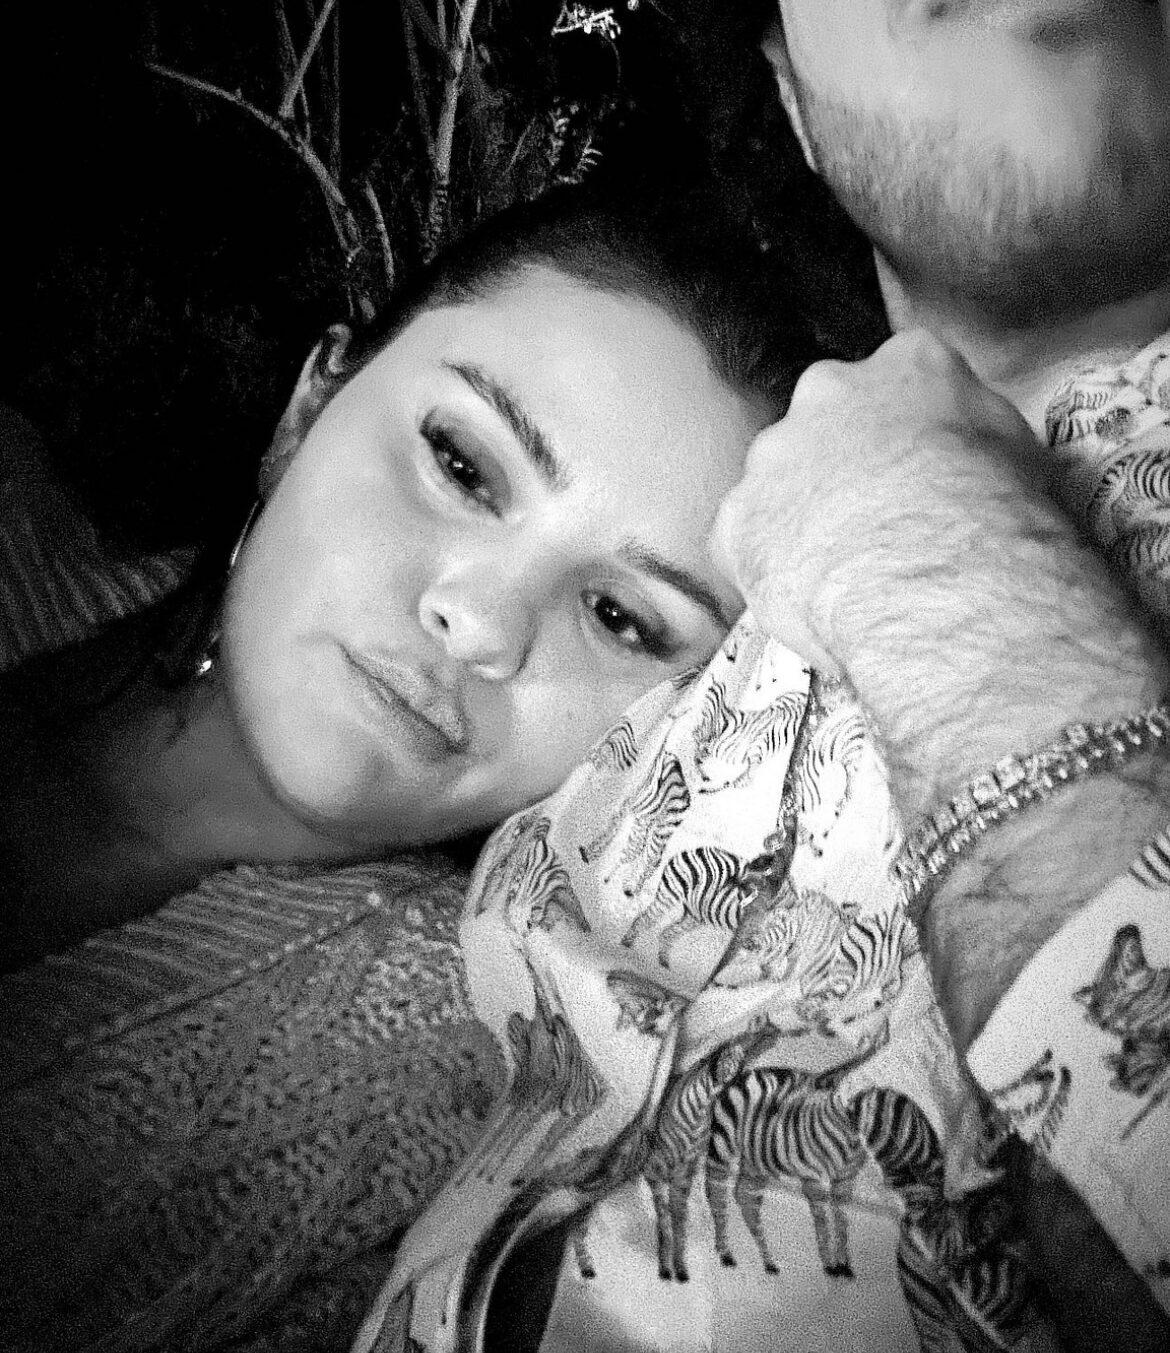 Selena Gomez goes Instagram official